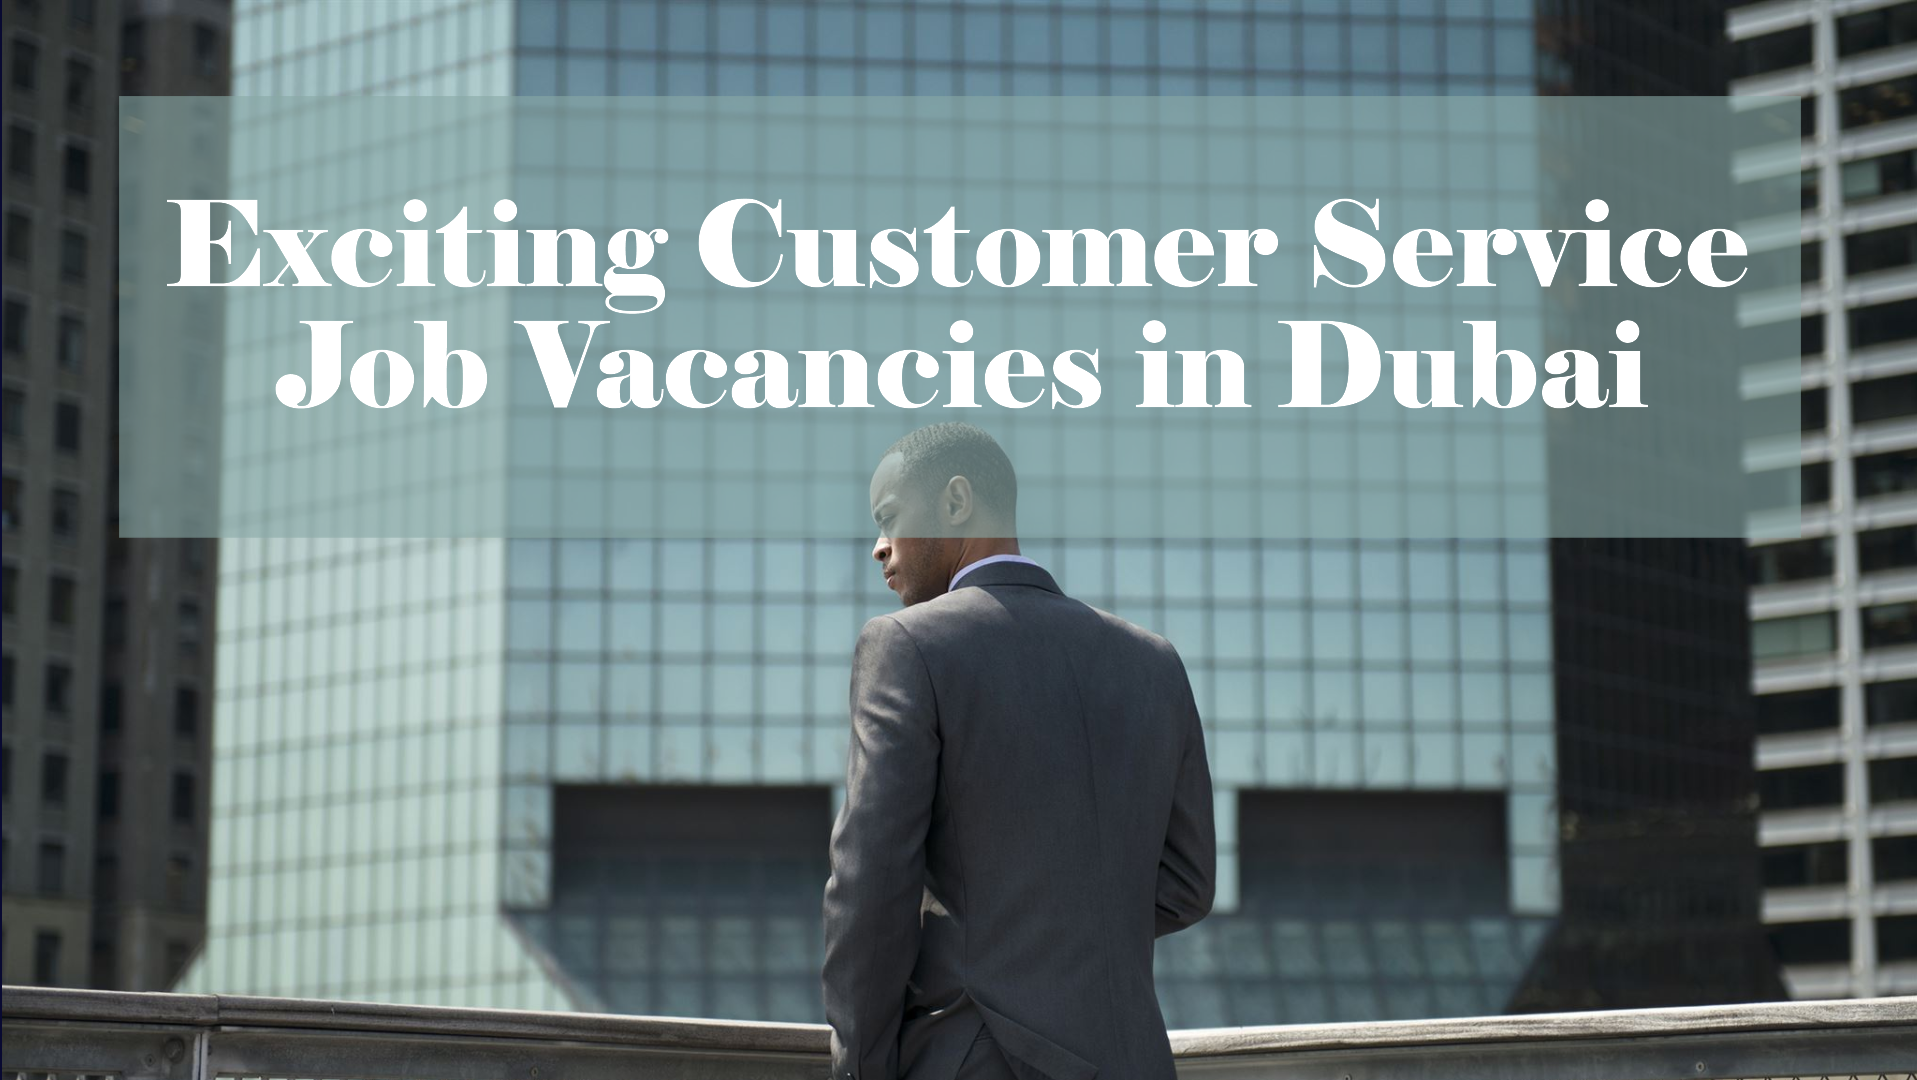 Customer Service job vacancies in Dubai